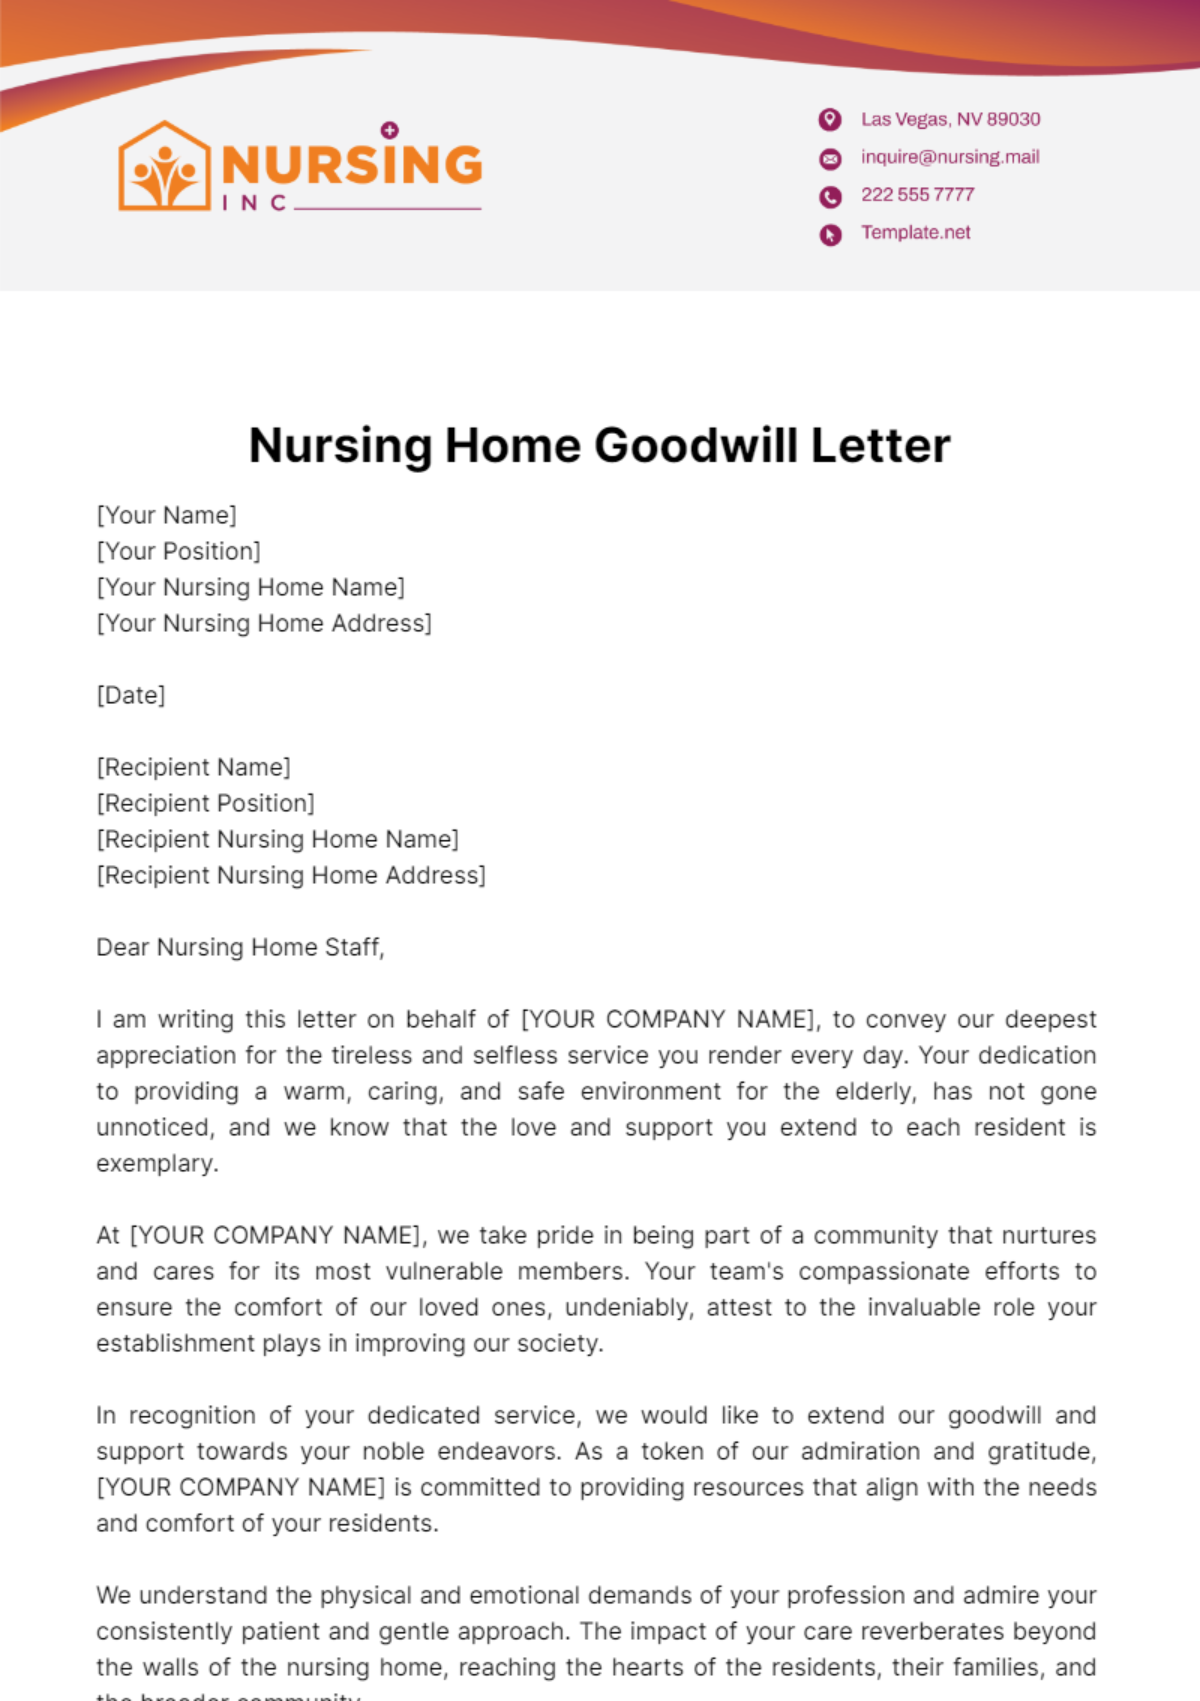 Nursing Home Goodwill Letter Template